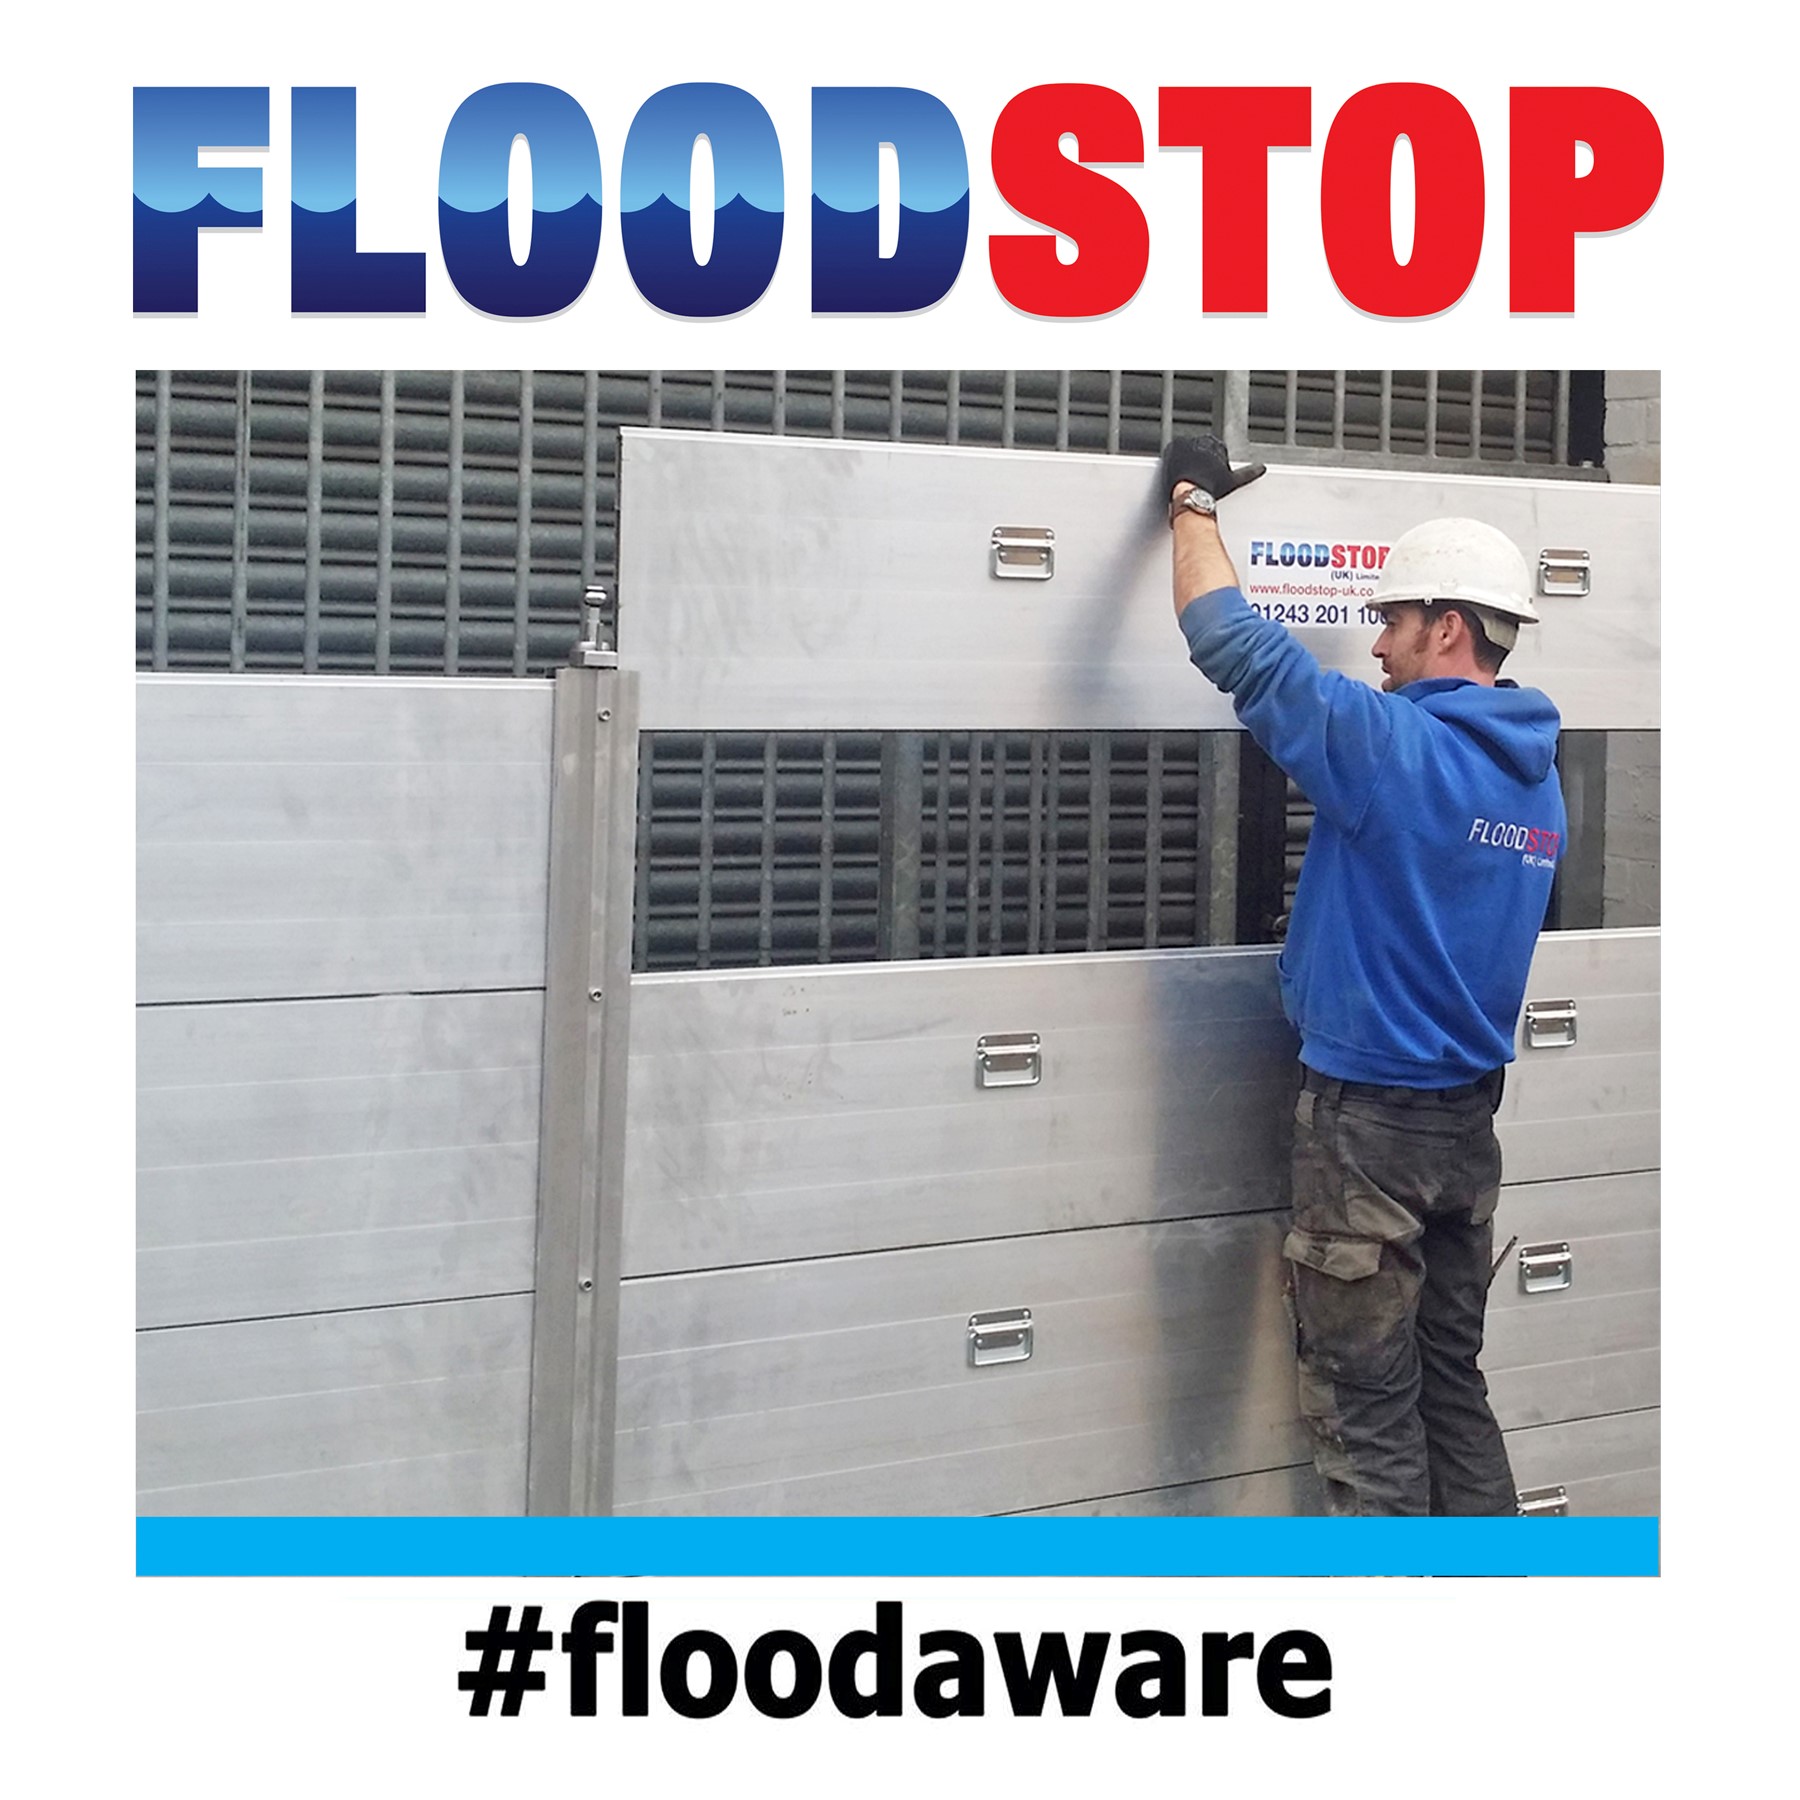 Floodstop Ltd